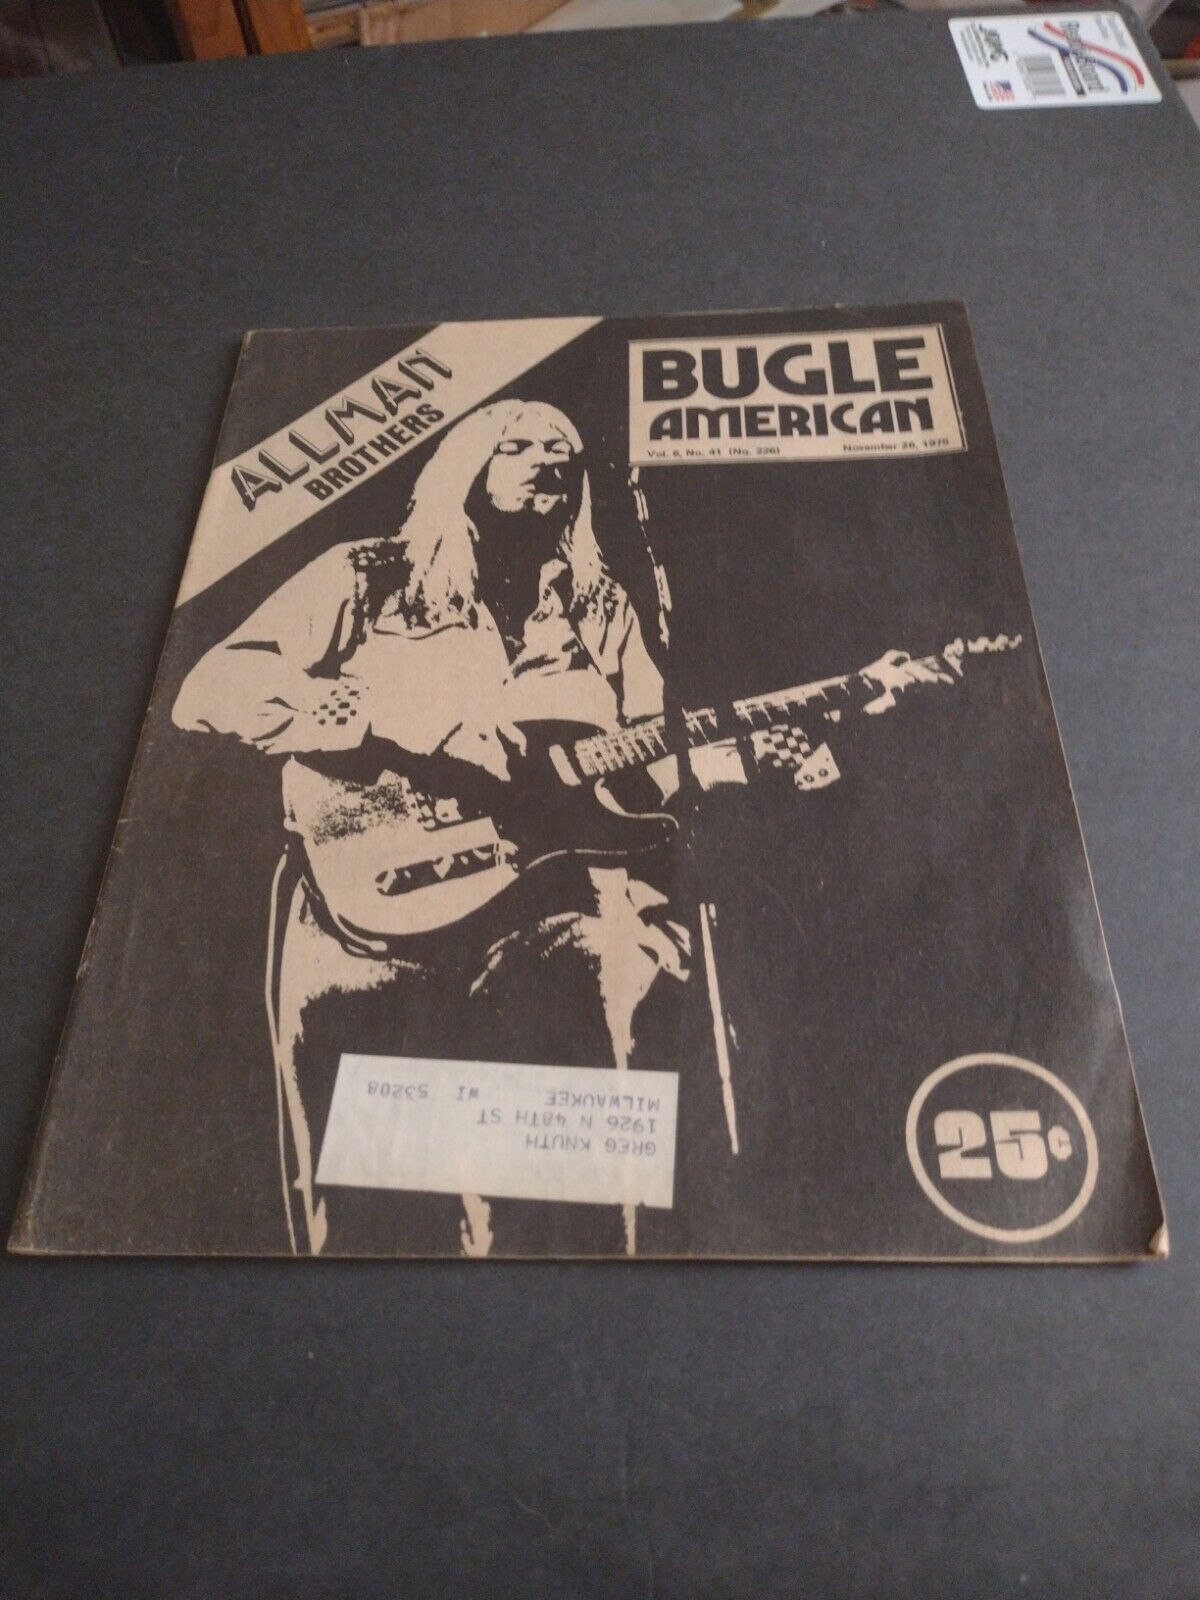 Bugle American Hippie  /allman Brothers Band November 1975 Kinks,freak Brothers